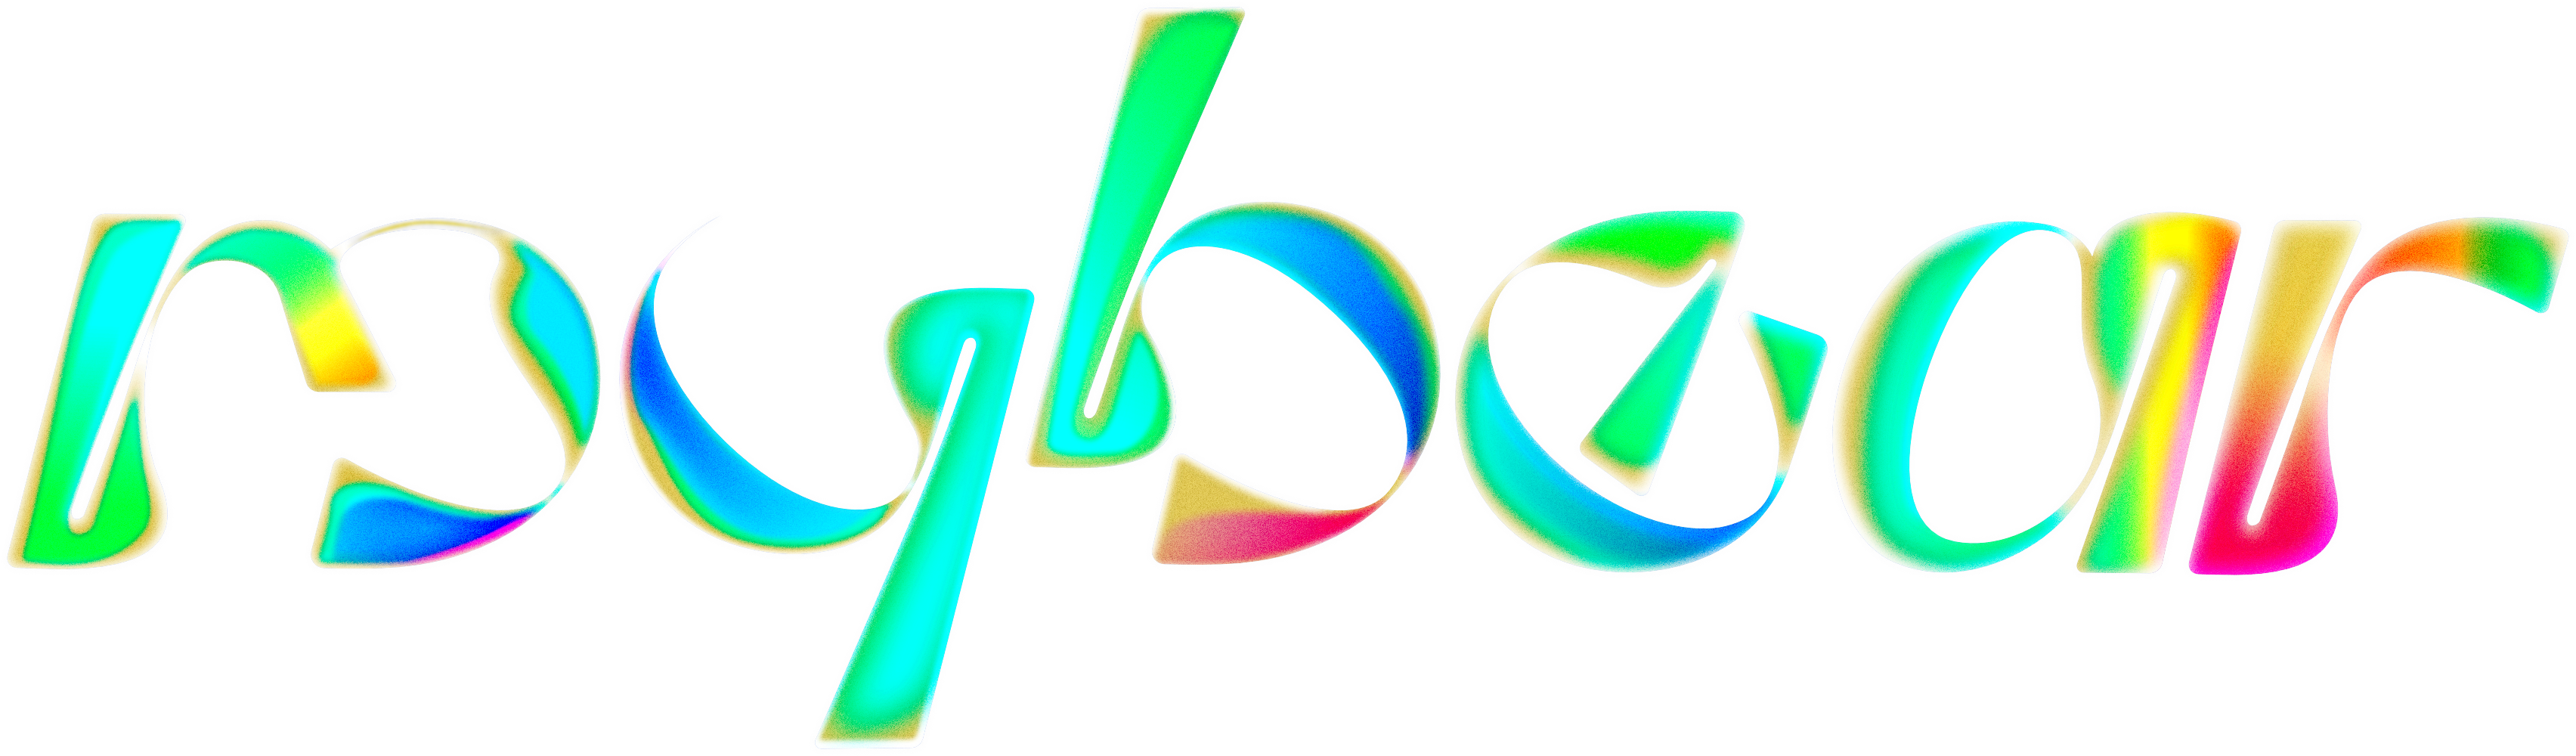 mybear_logotype